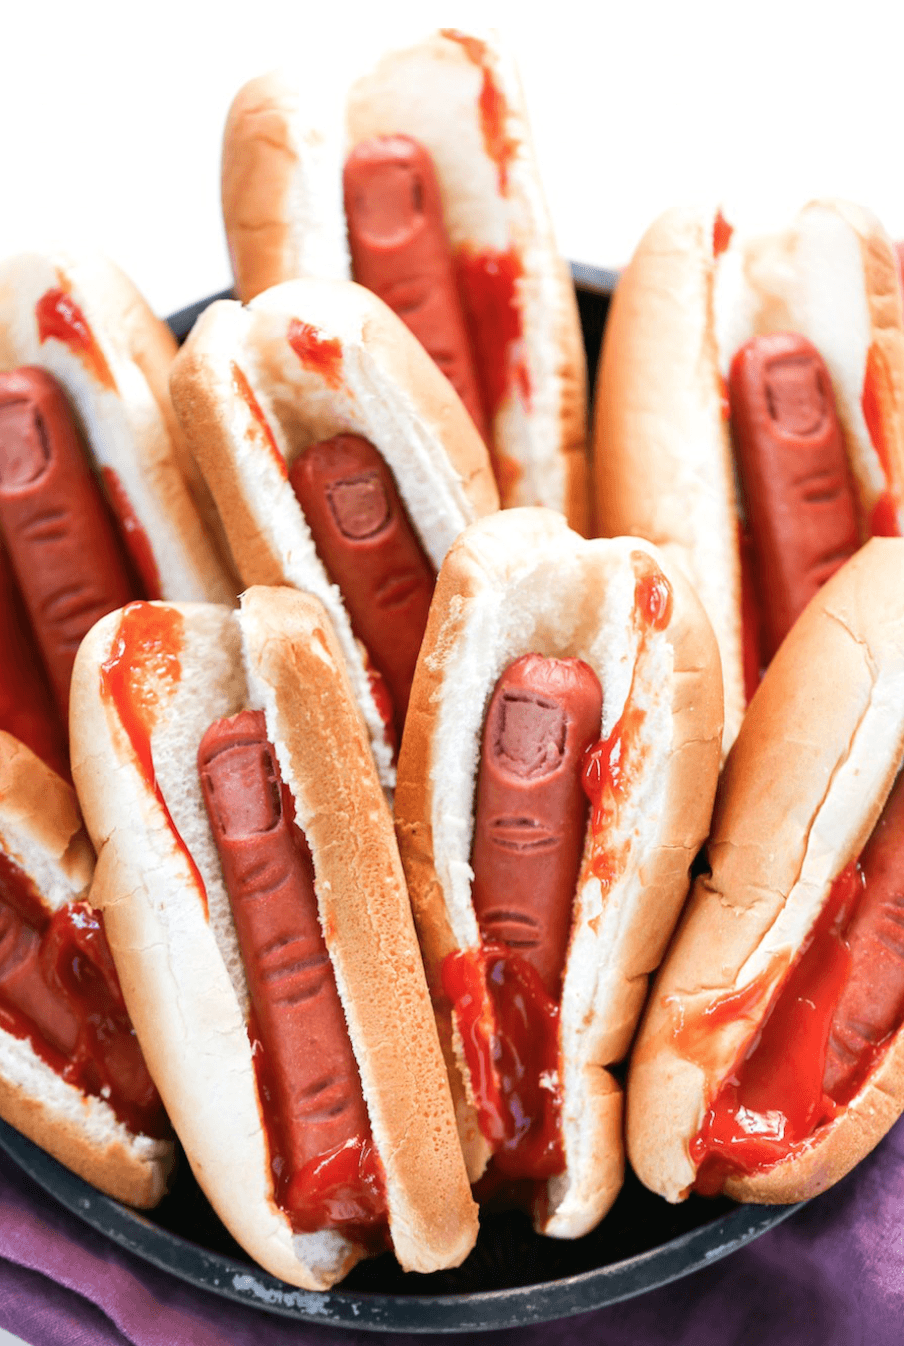 Halloween hotdogs